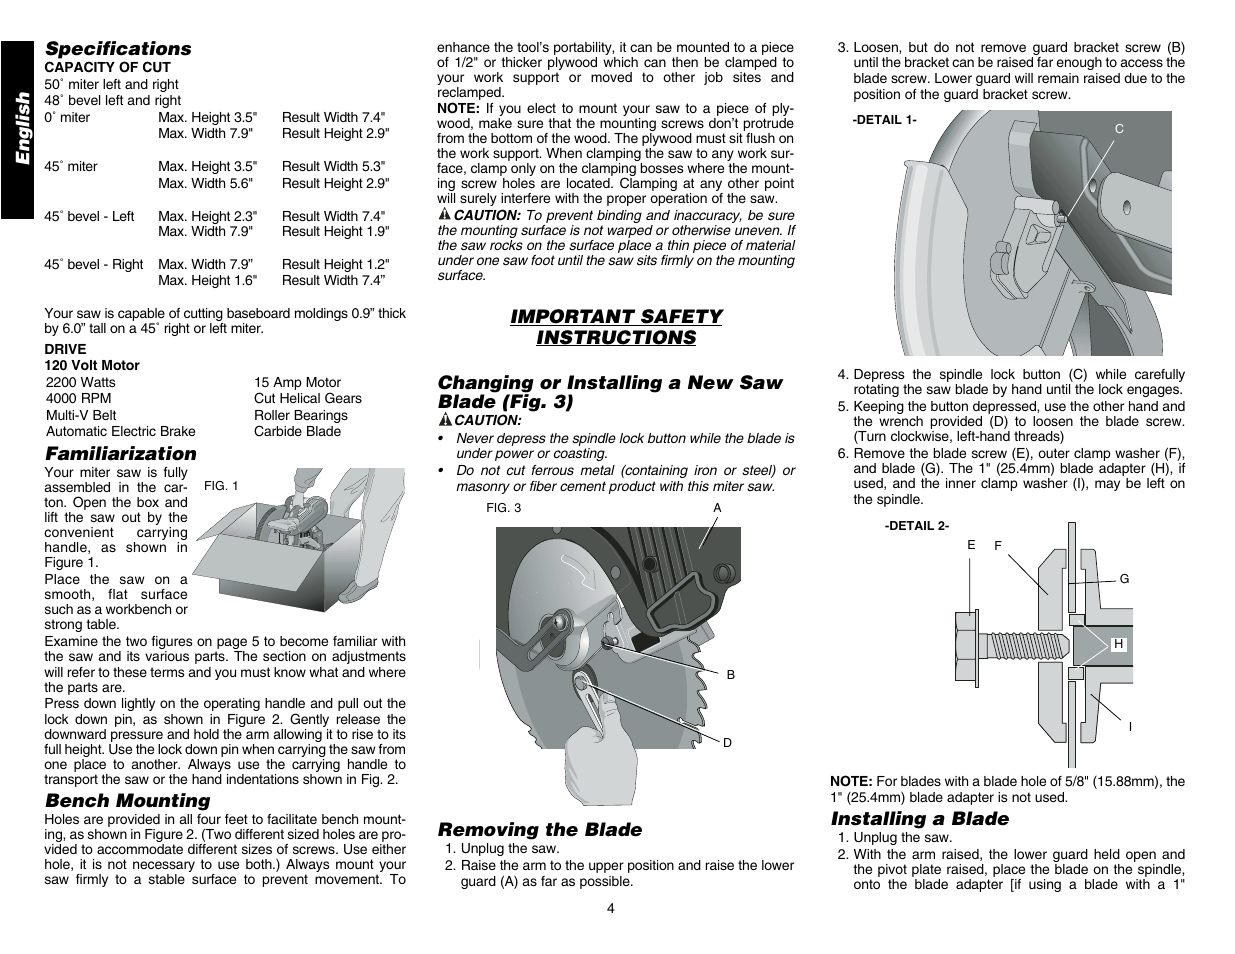 English, Installing a blade, Specifications | DeWalt Manual | Page 6 / 52 | Original mode